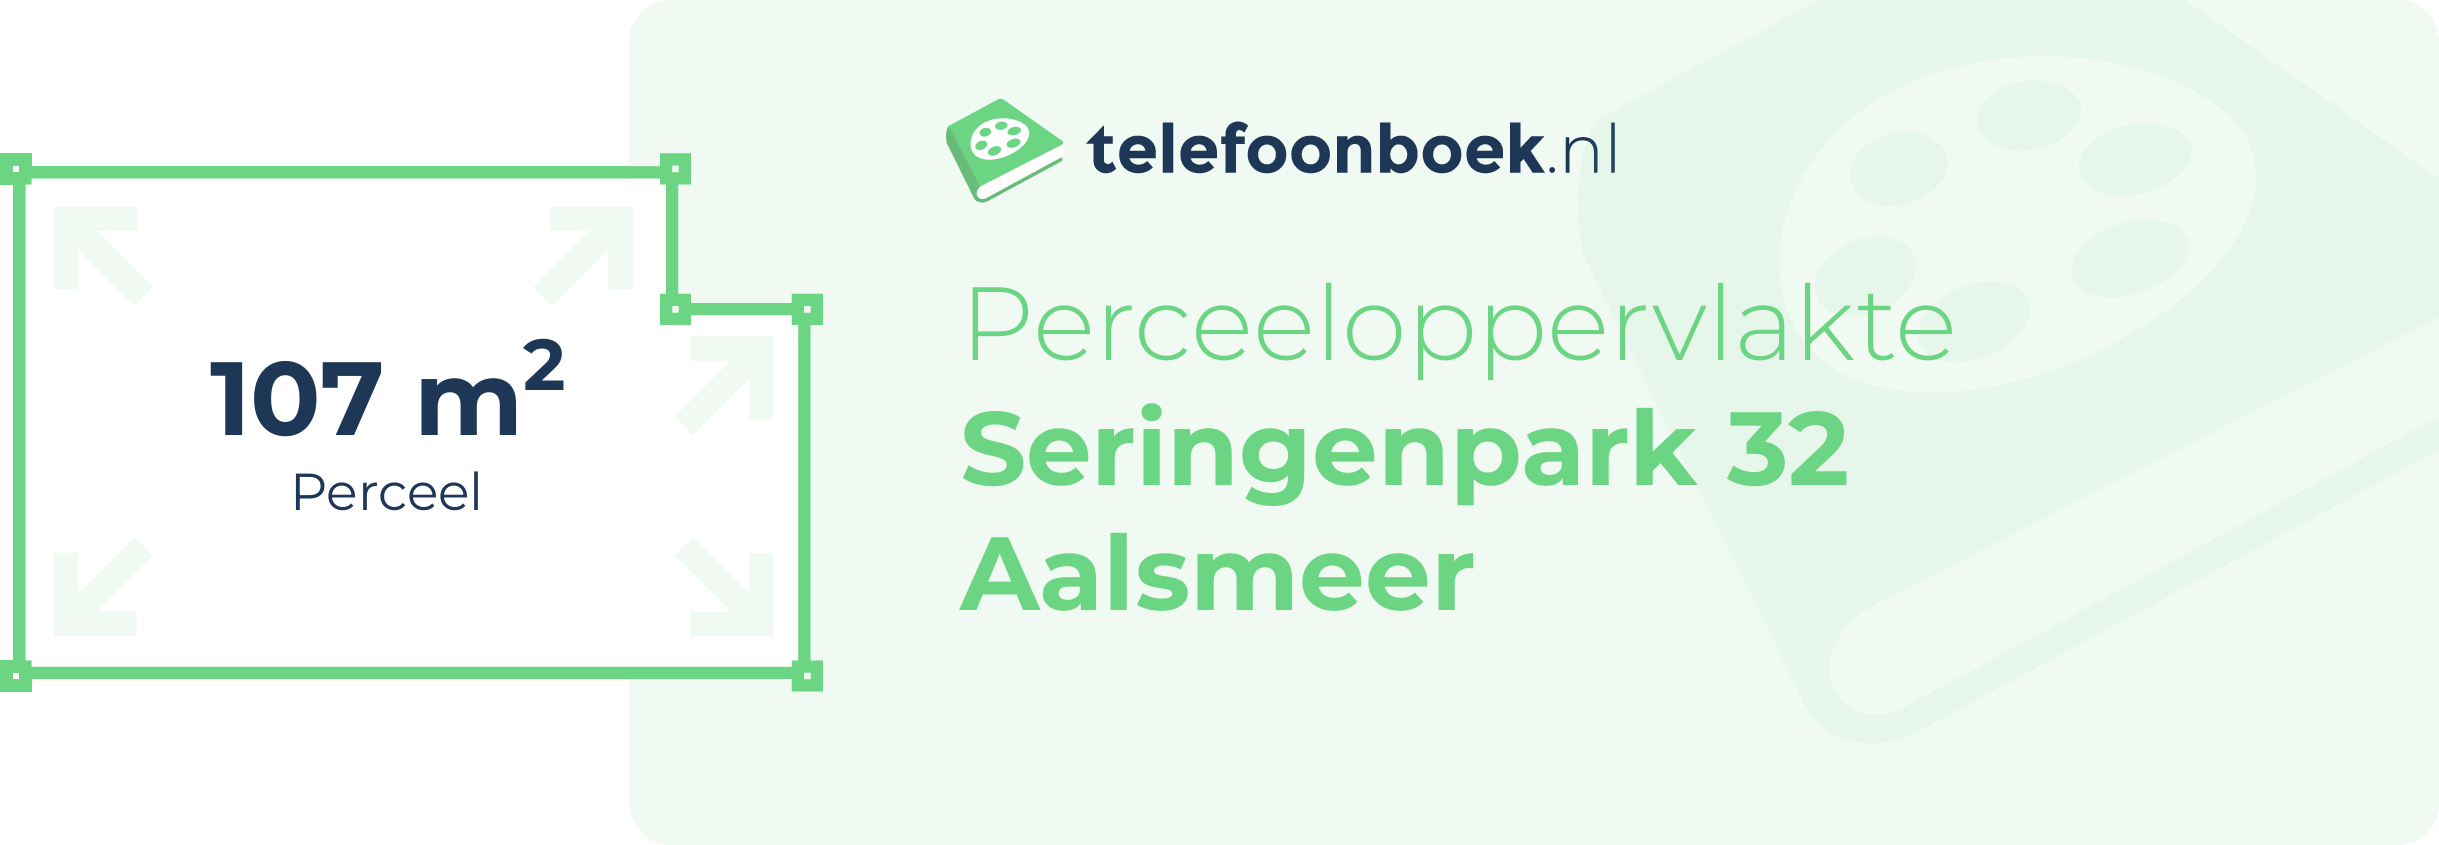 Perceeloppervlakte Seringenpark 32 Aalsmeer